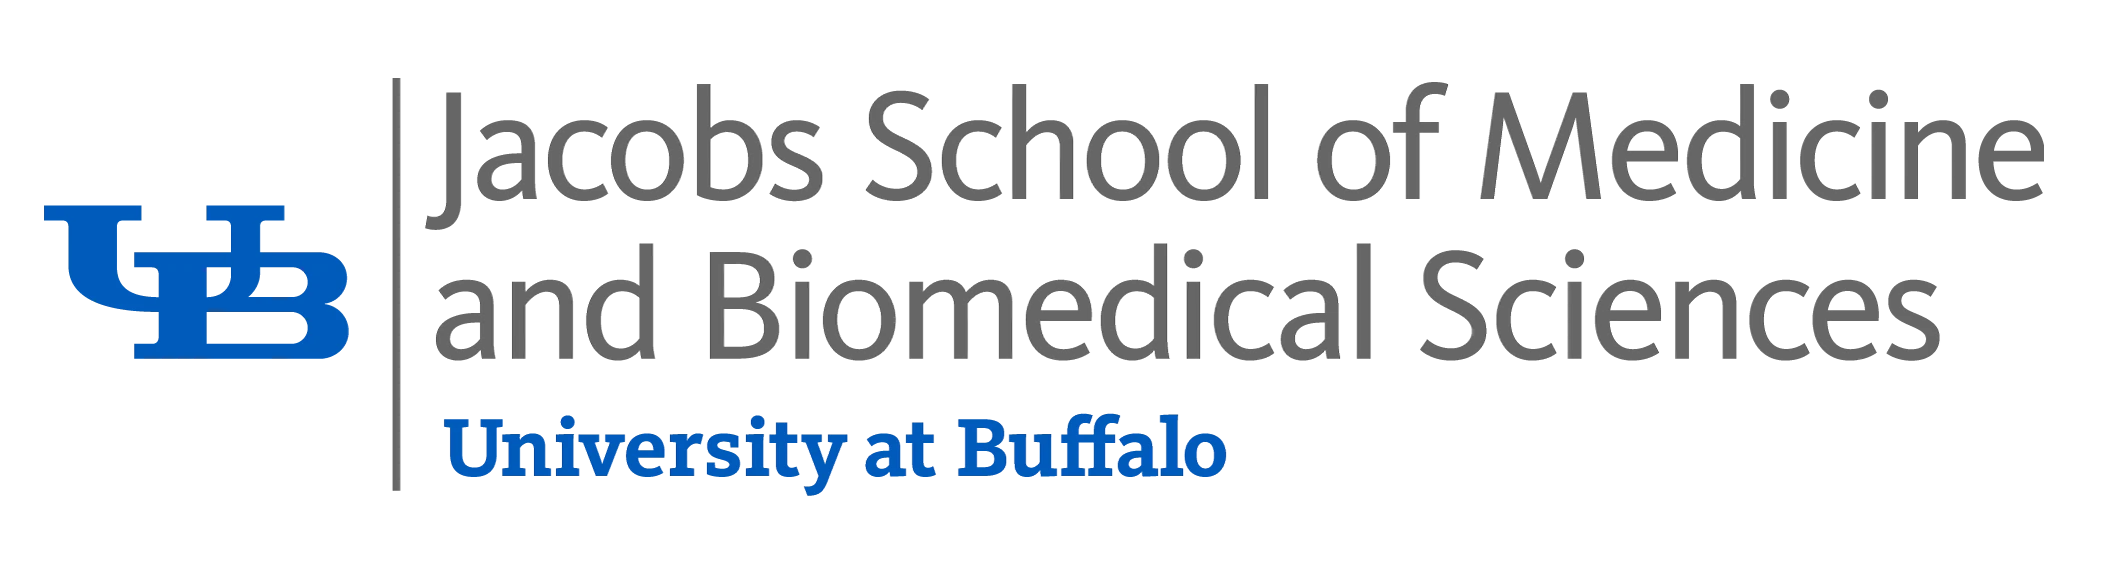 University at Buffalo School of Medicine and Biomedical Sciences